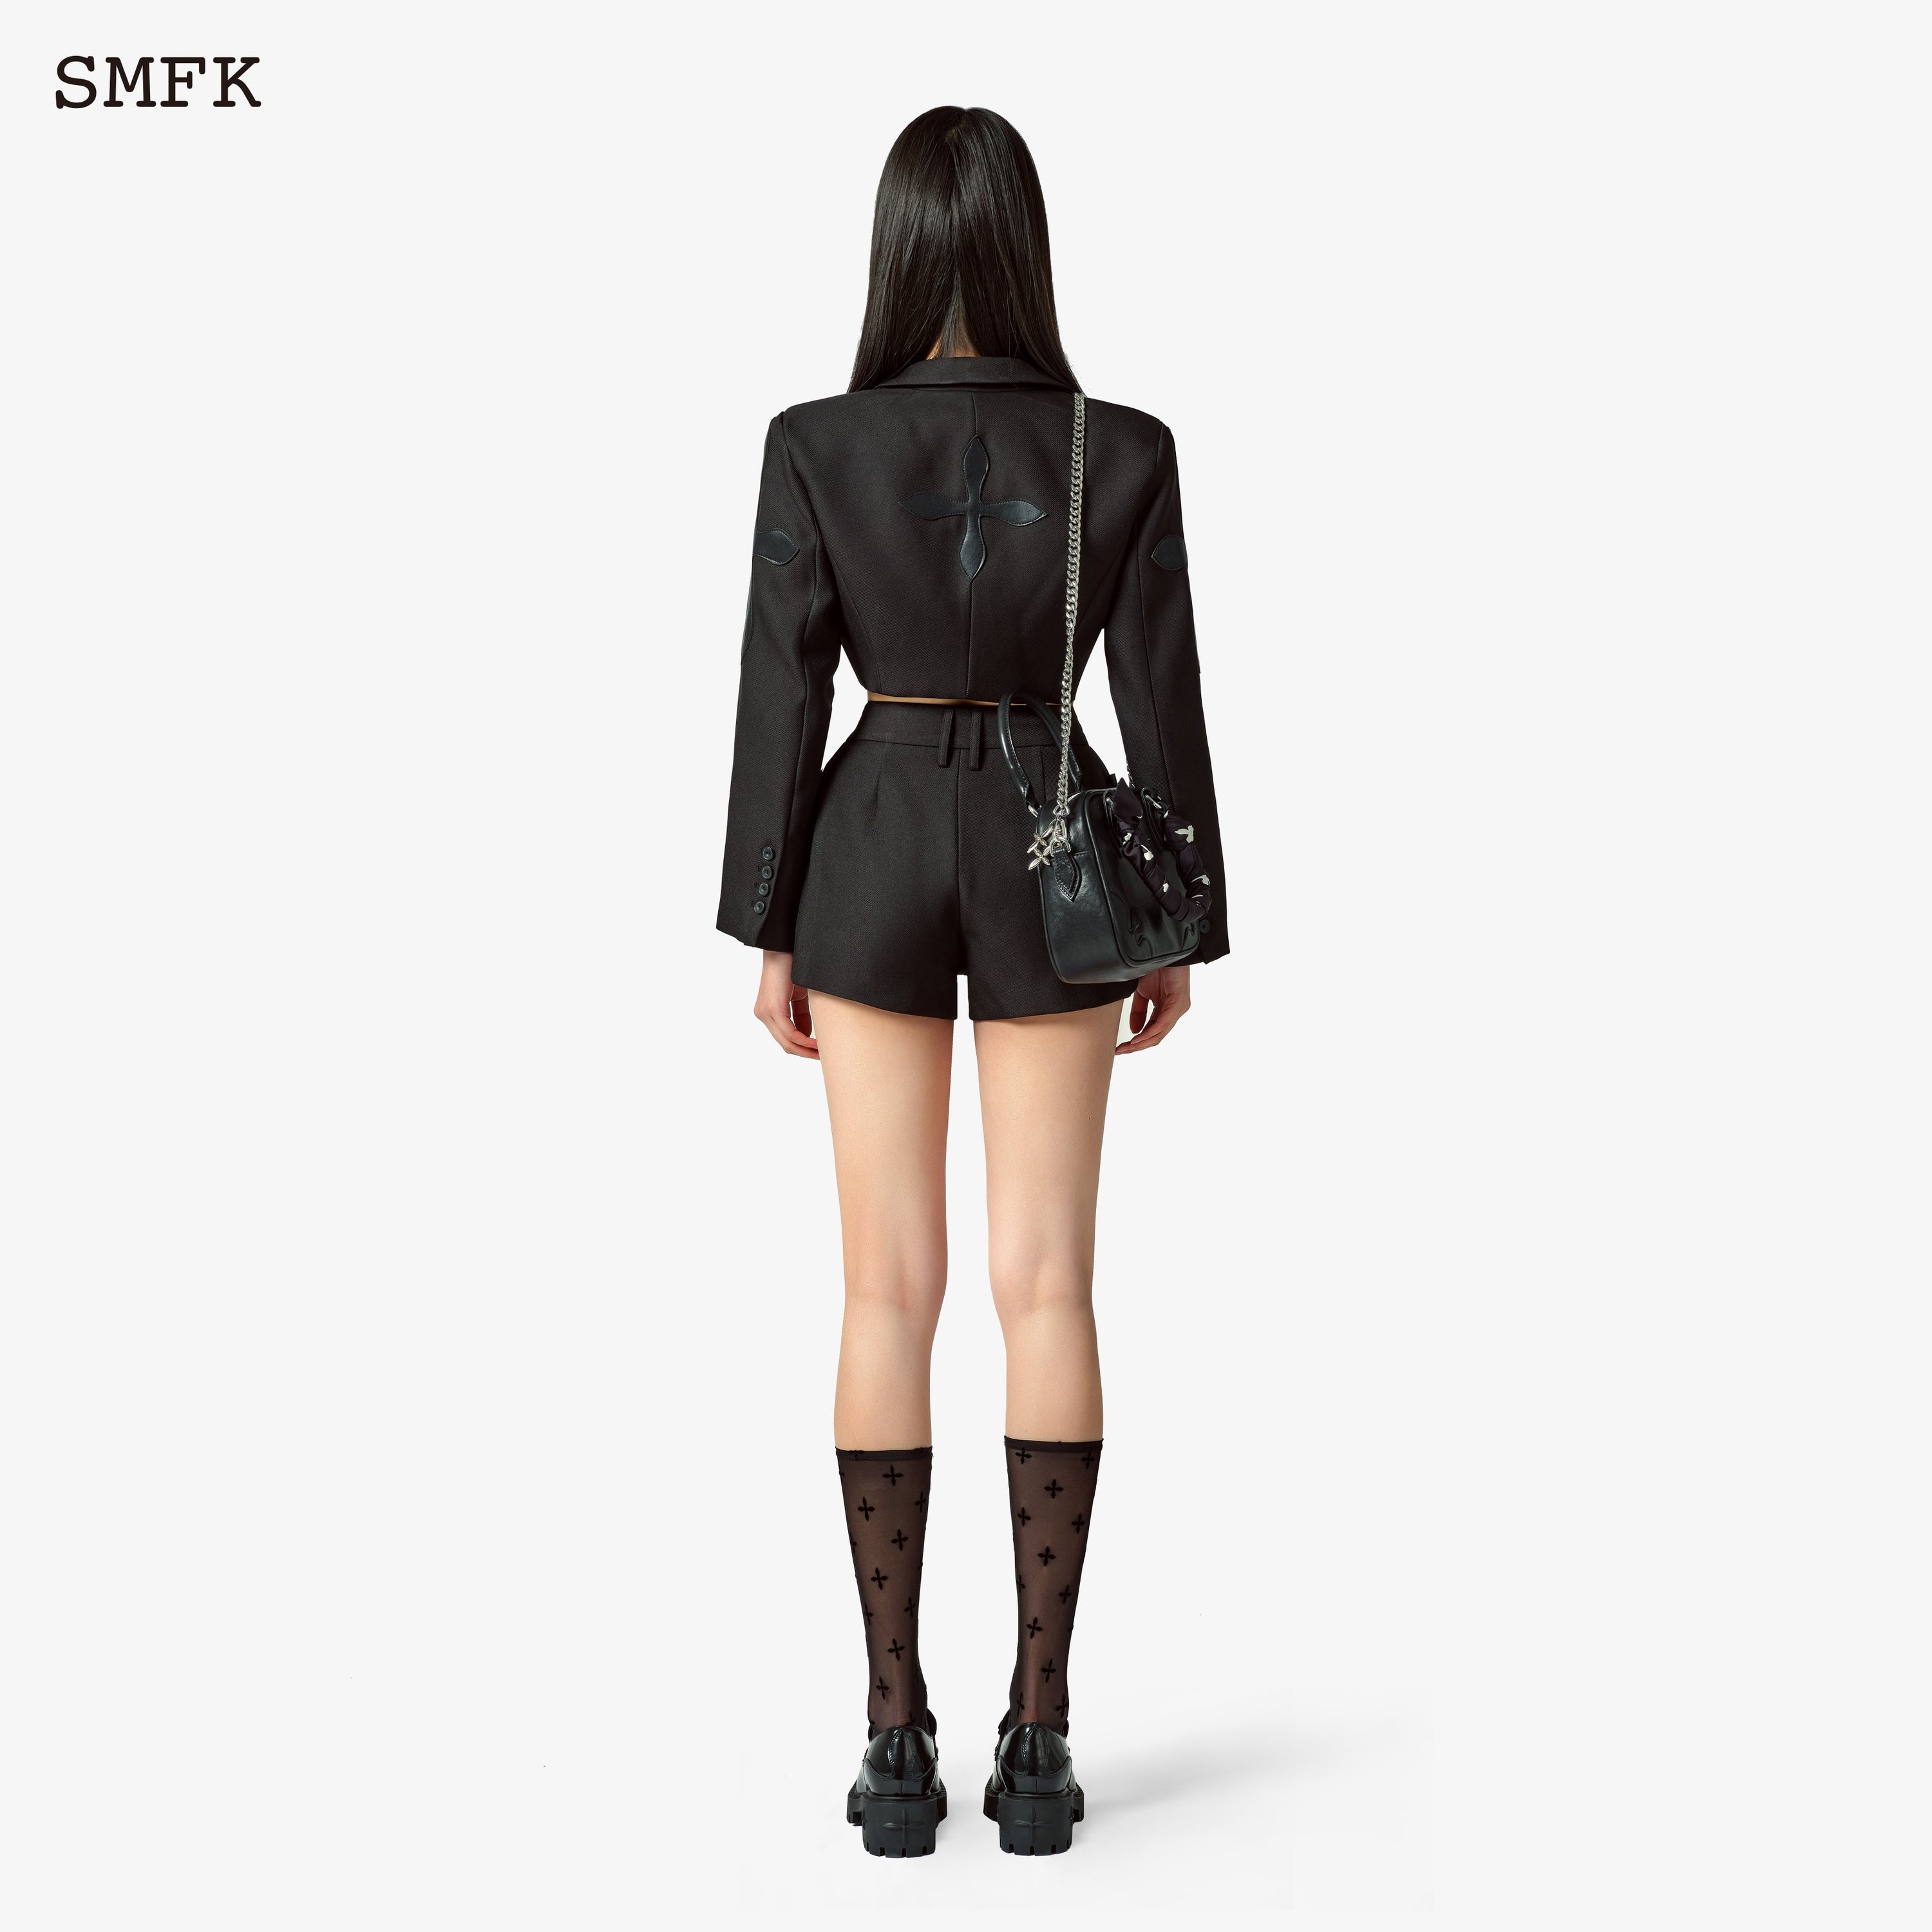 Dancer Suit Shorts - SMFK Official